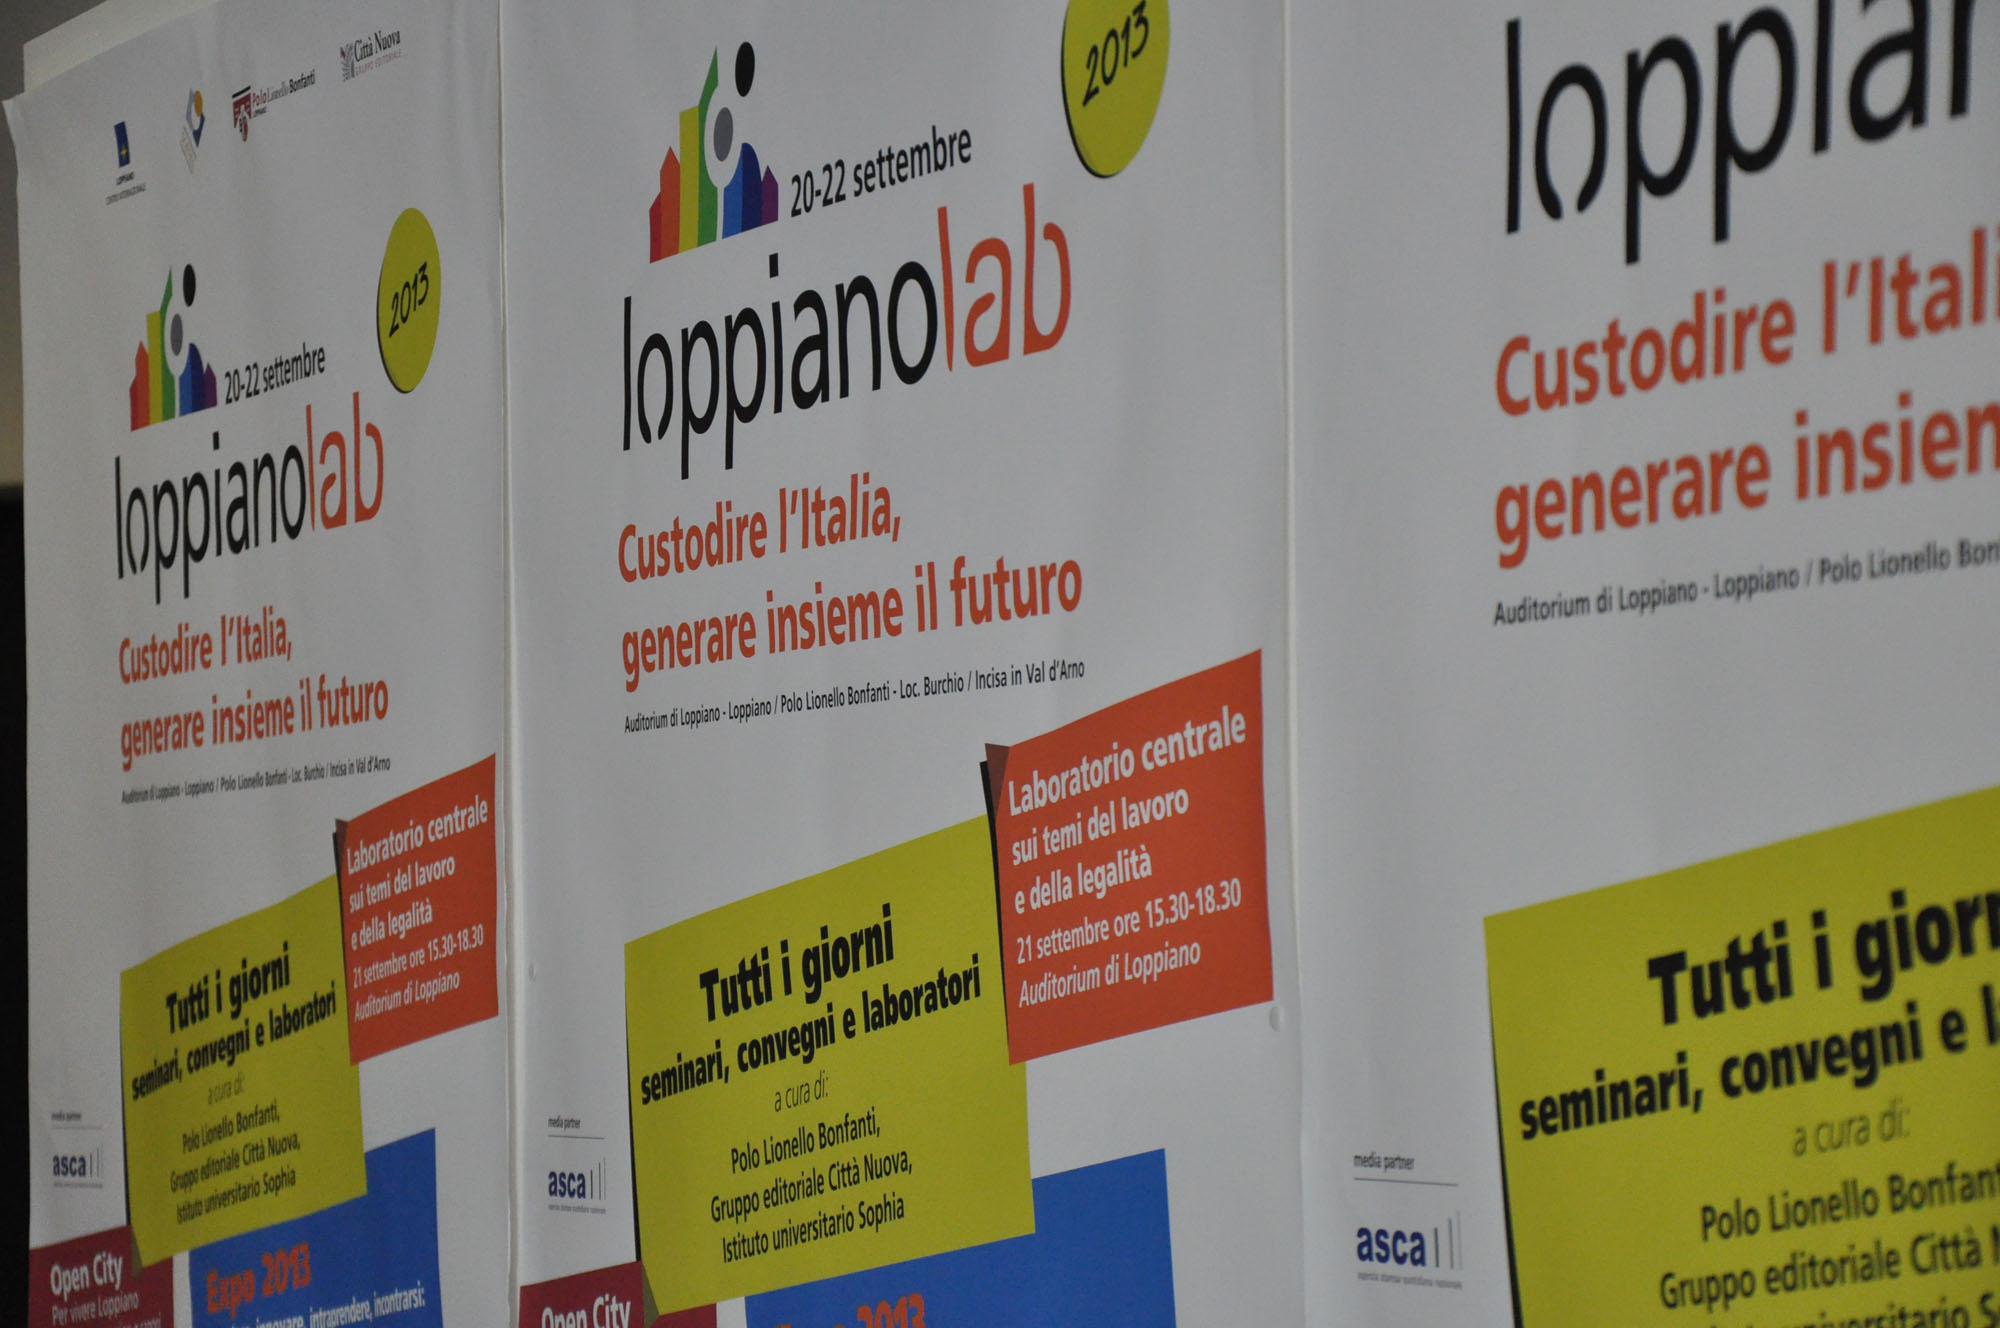 Loppiano Lab